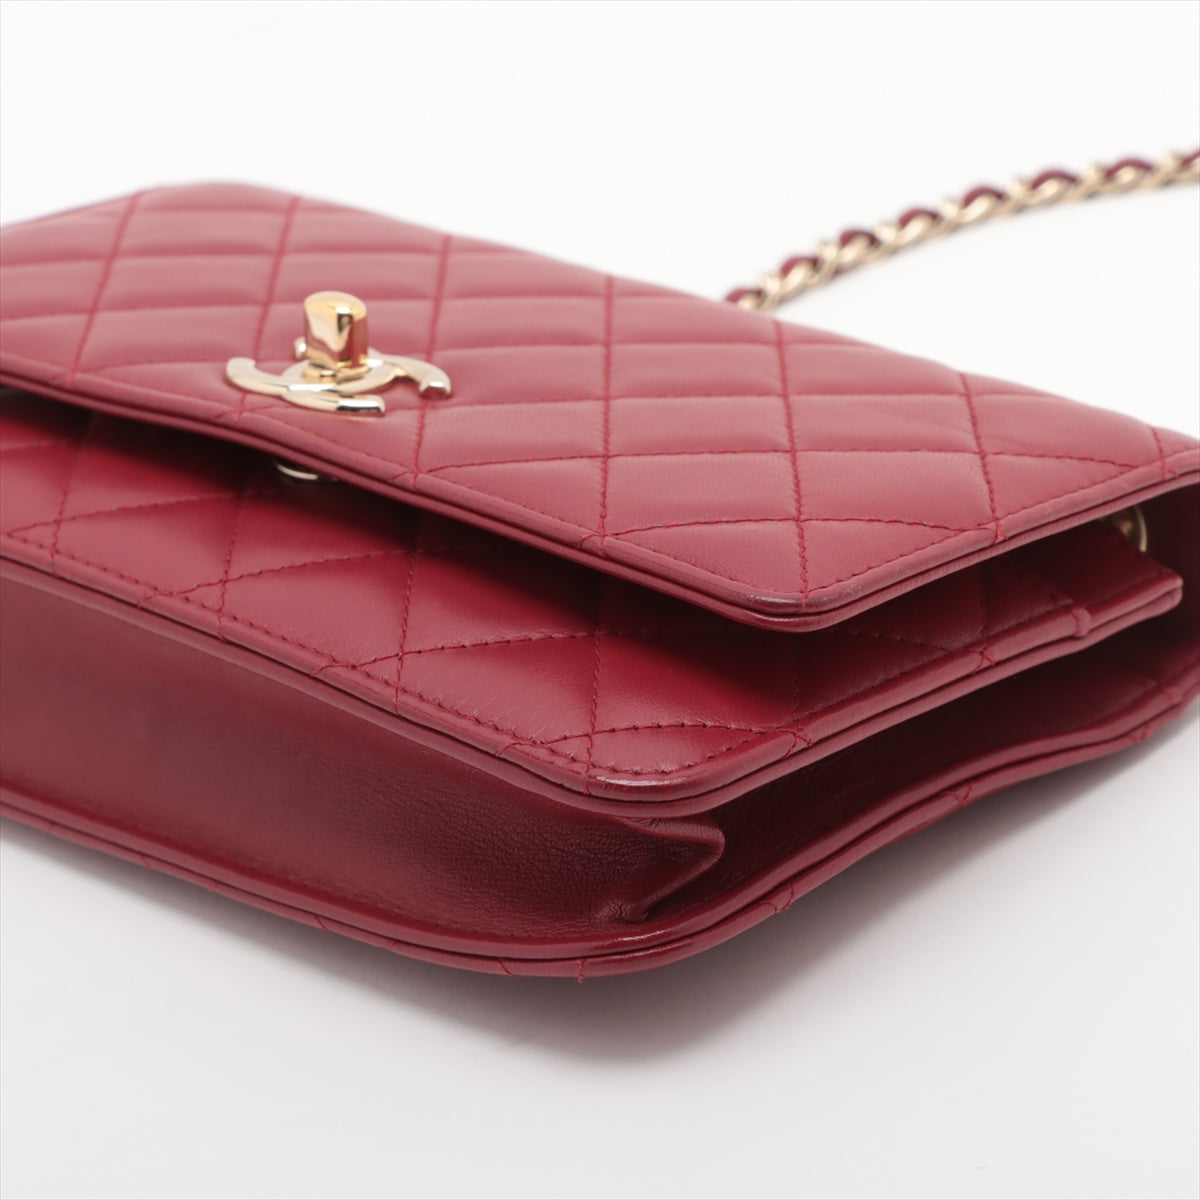 Chanel Matrasse in Chain Wallet Red G